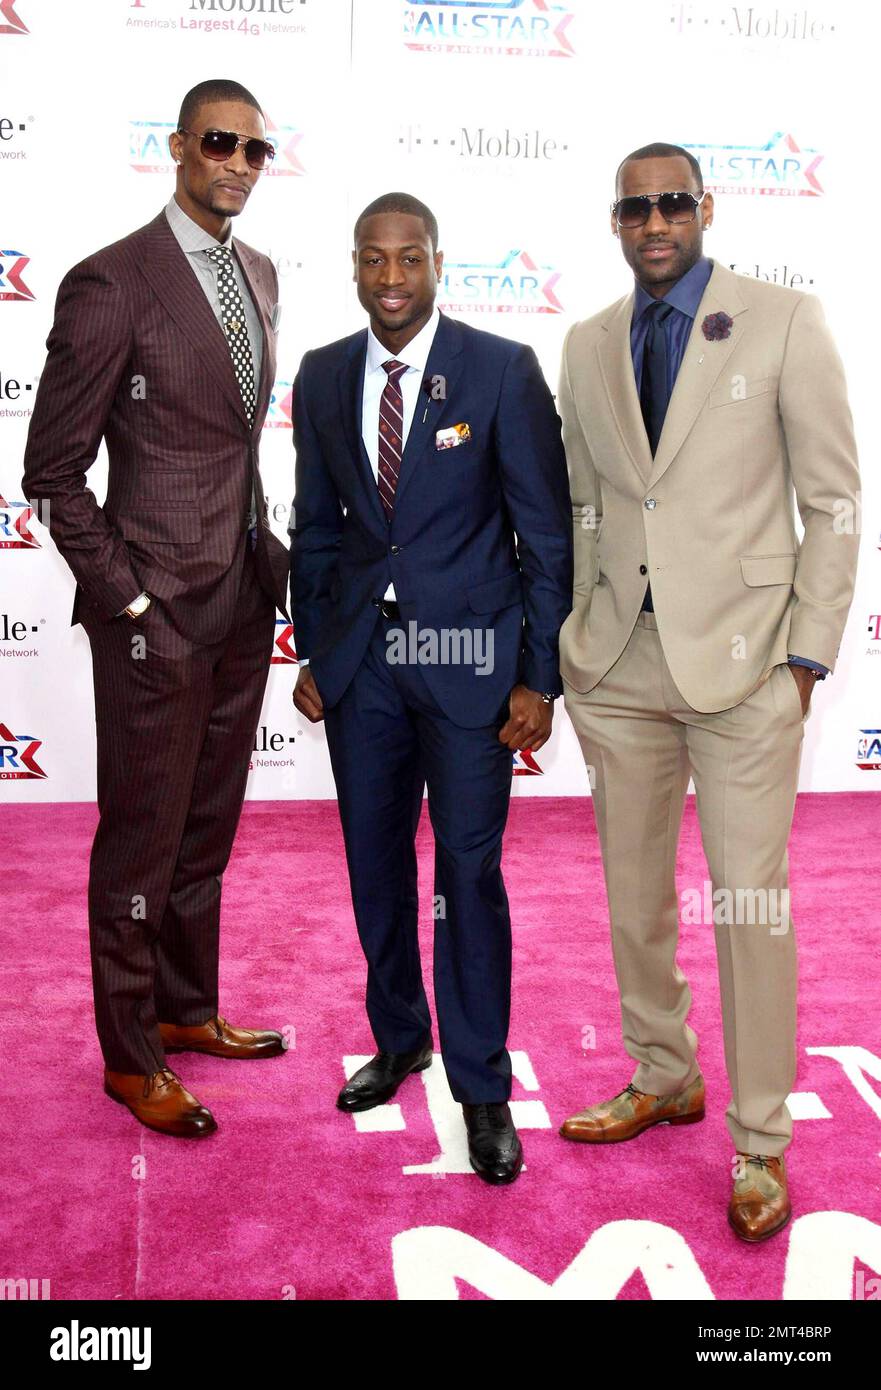 LeBron James, Dwyane Wade and Chris Bosh of the Miami Heat pose